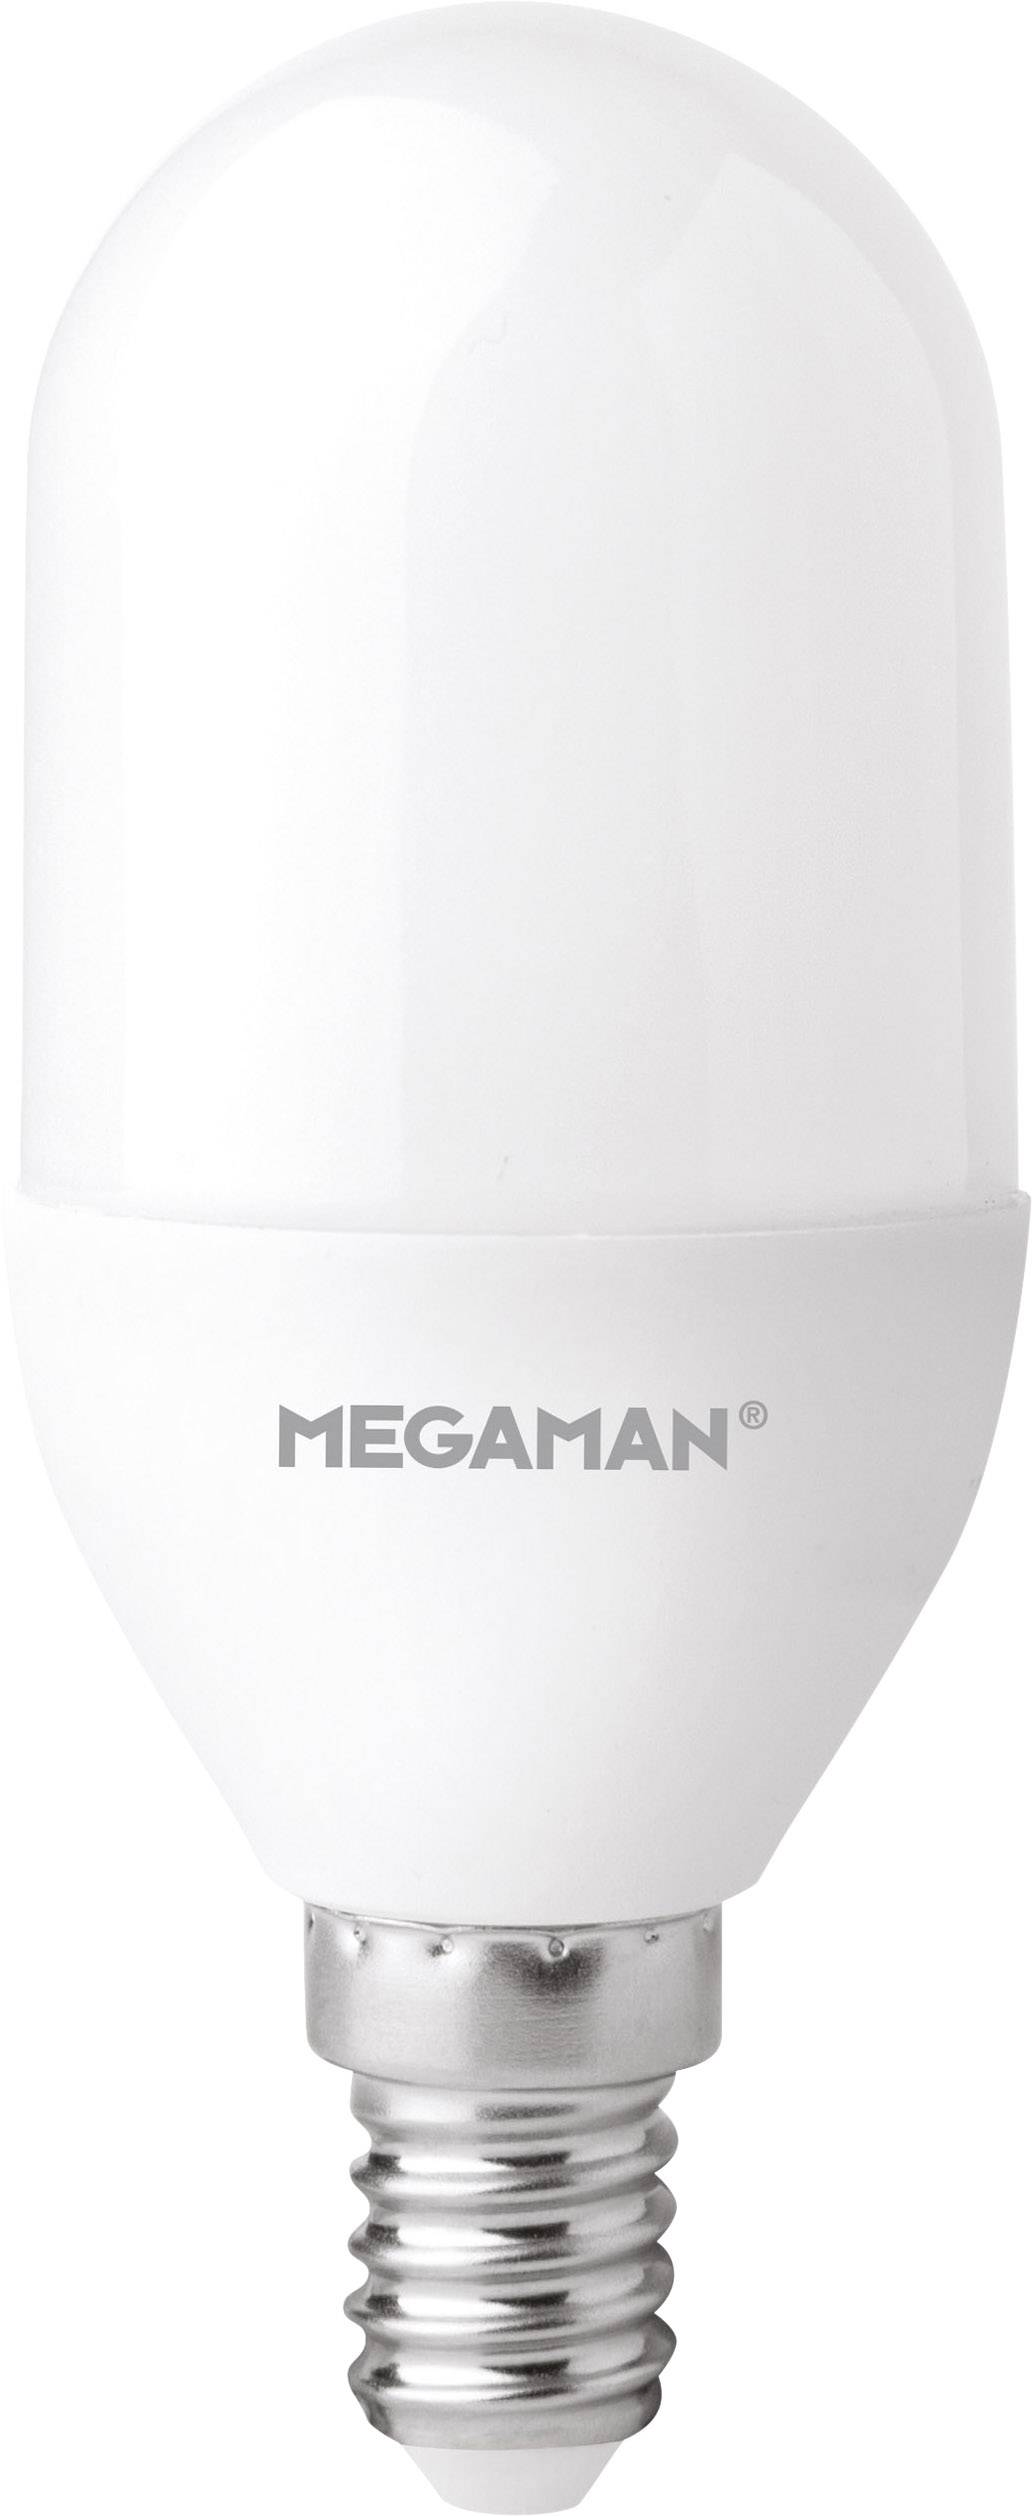 MEGAMAN MEGAM LED Liliput T40 8,5W/828 MM21136 E14 1055lm 15000h A++,9kWh/1000